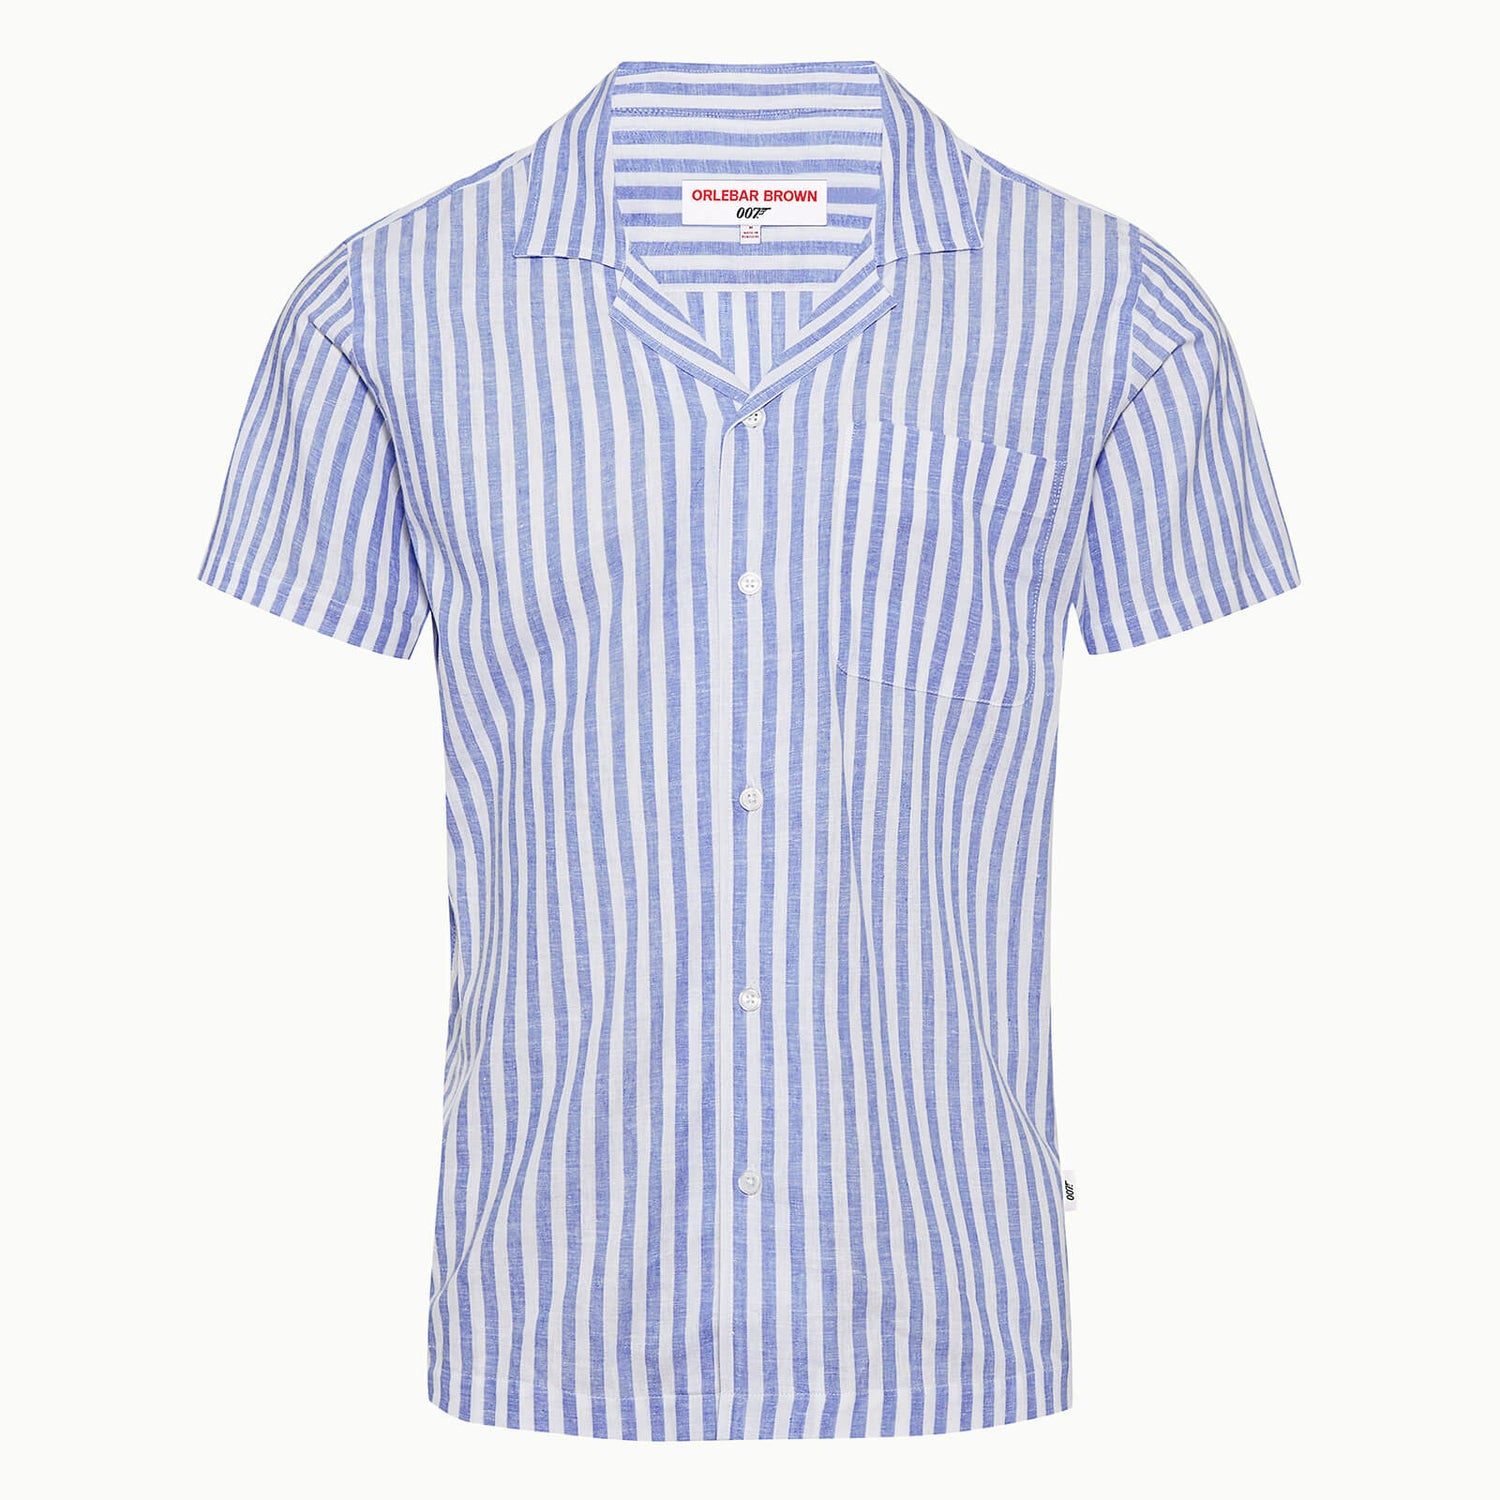 Thunderball Stripe Shirt 007 系列卡普里开领衬衫 - 海滨蓝/白色